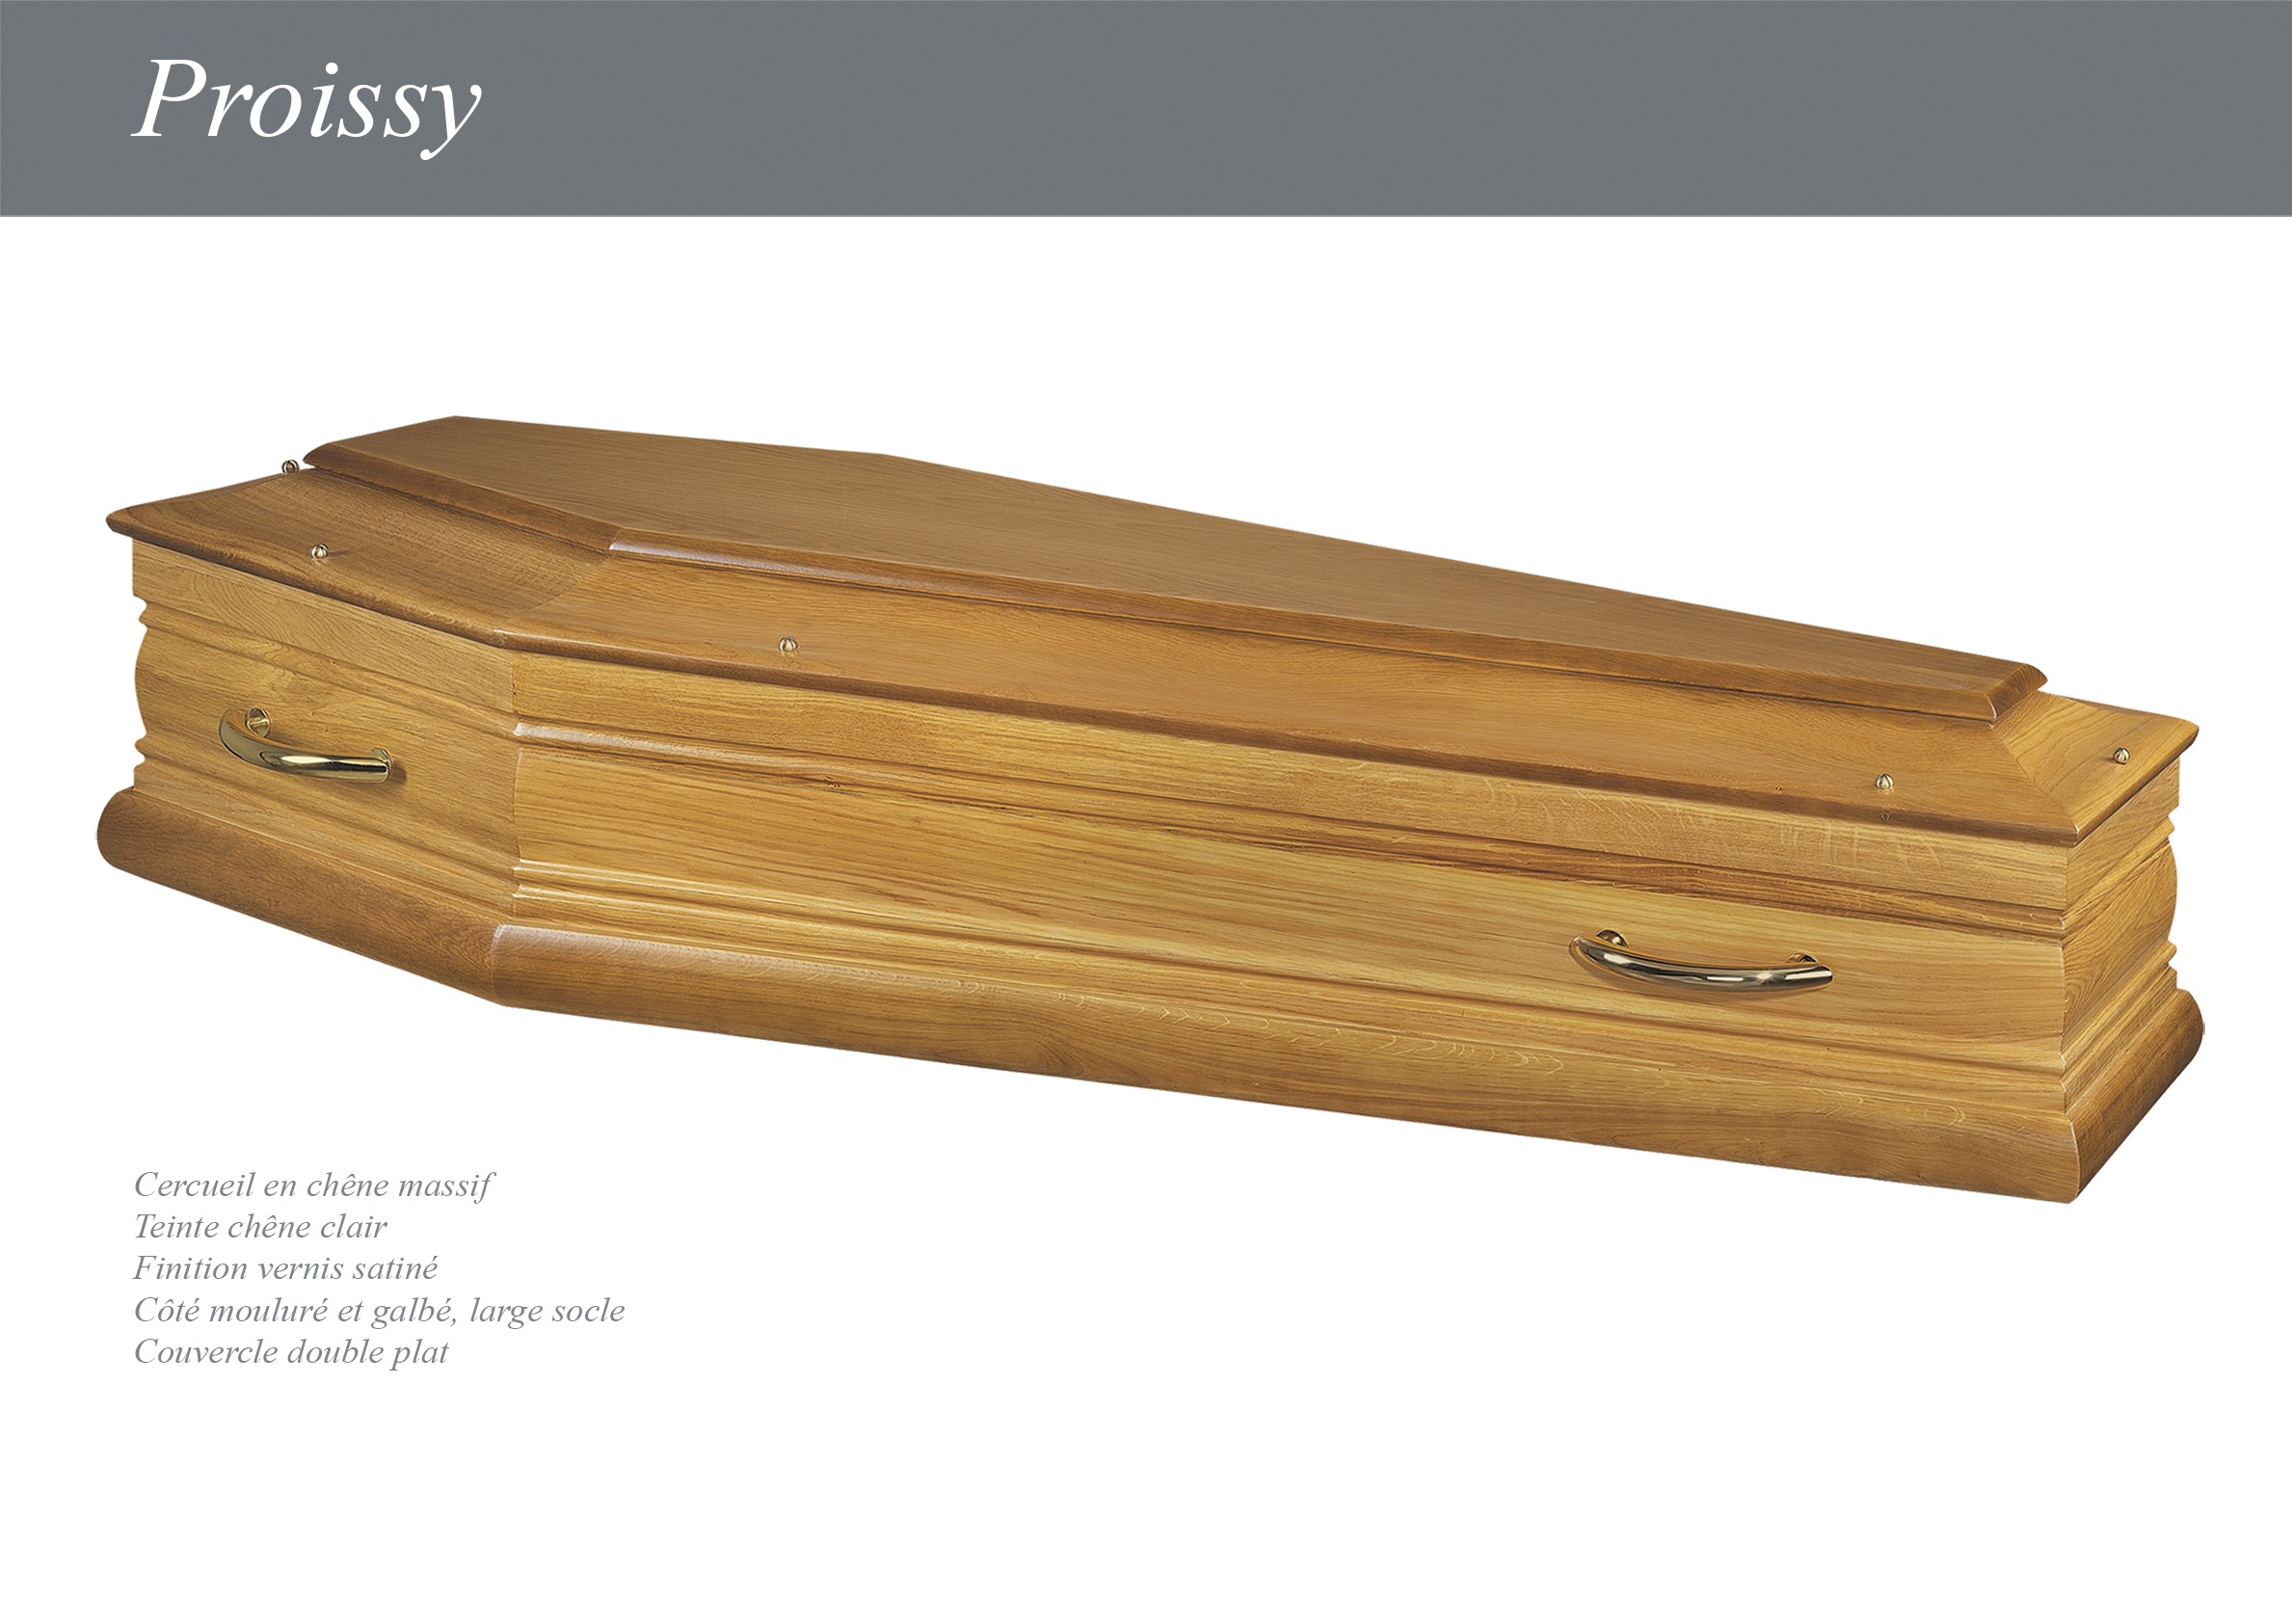 Cercueil Proissy, Chêne, 1800 €